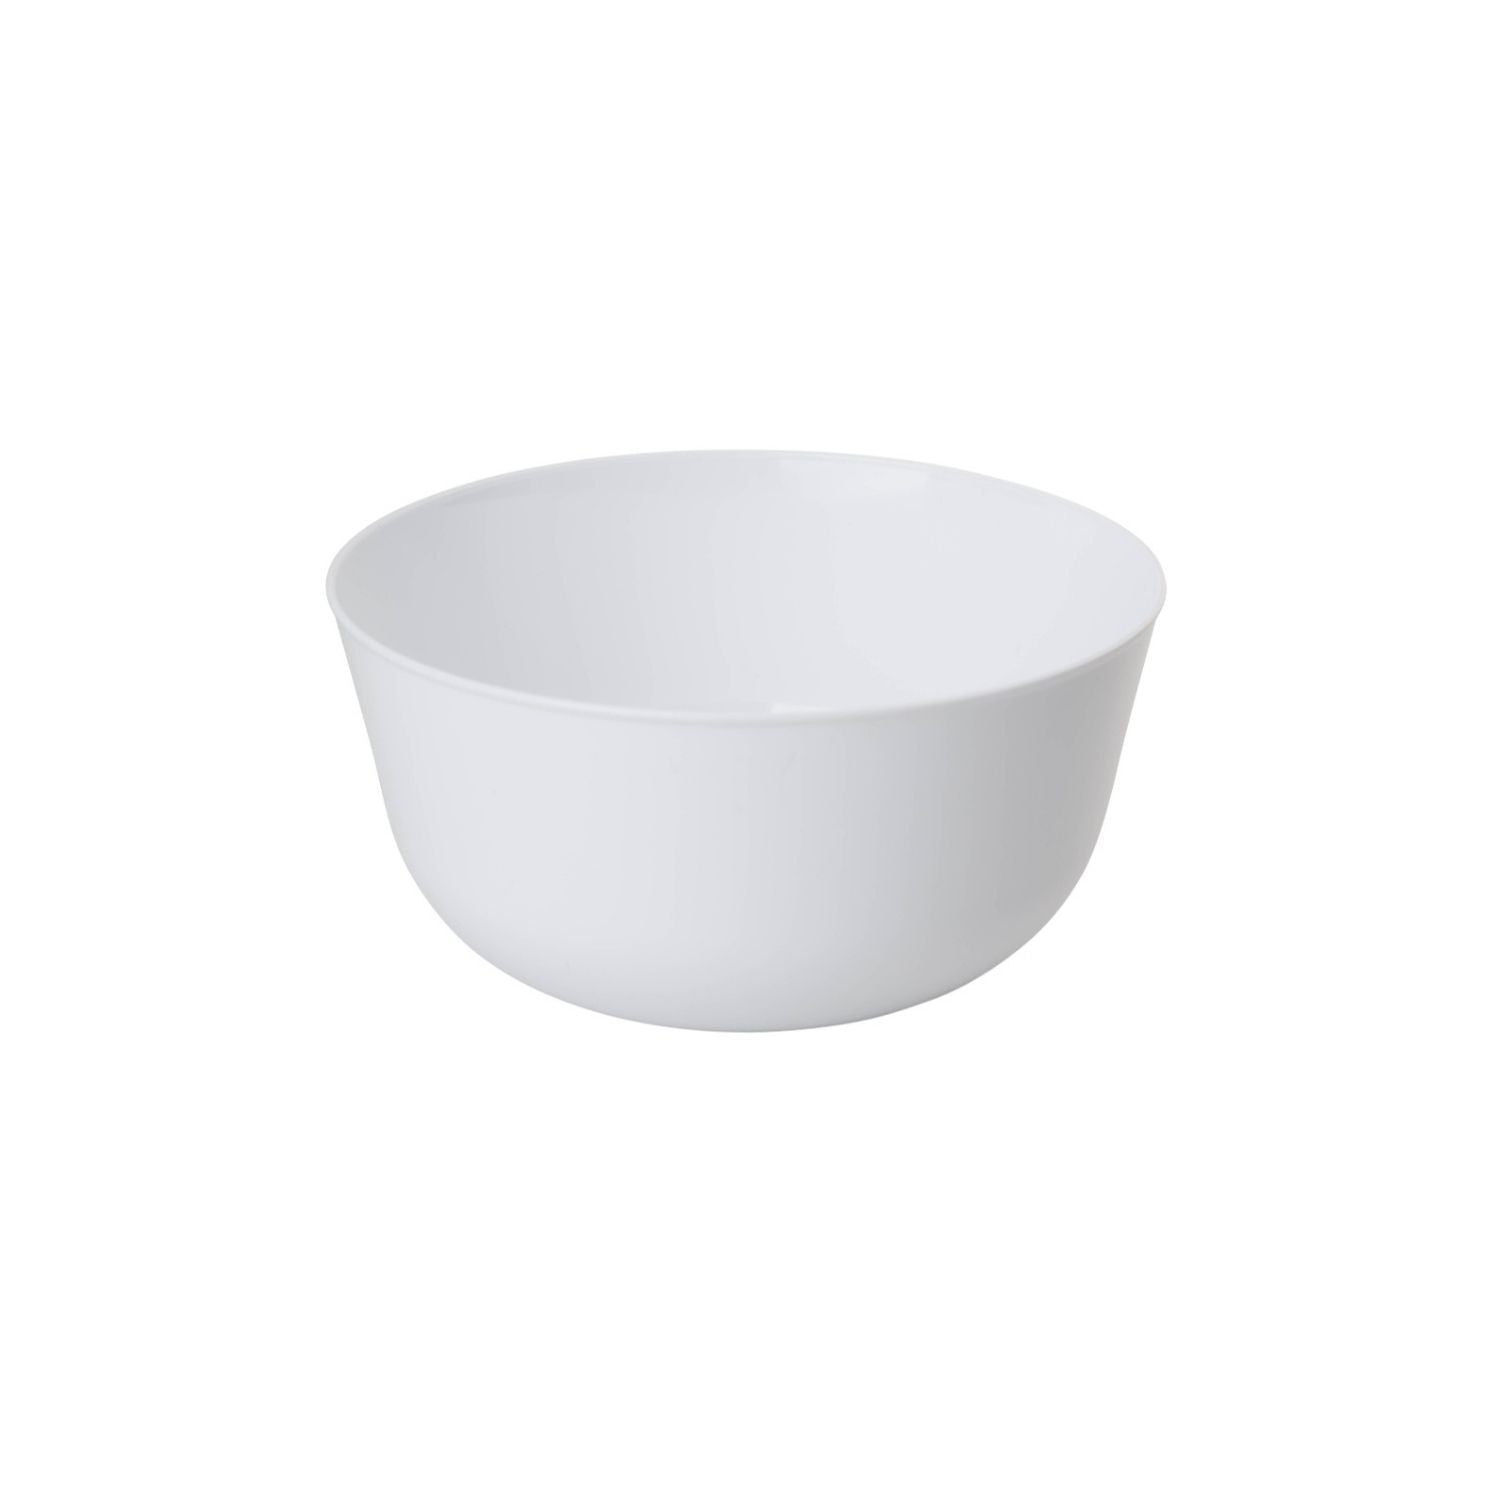 Trend White Plastic Bowls (120 Count)